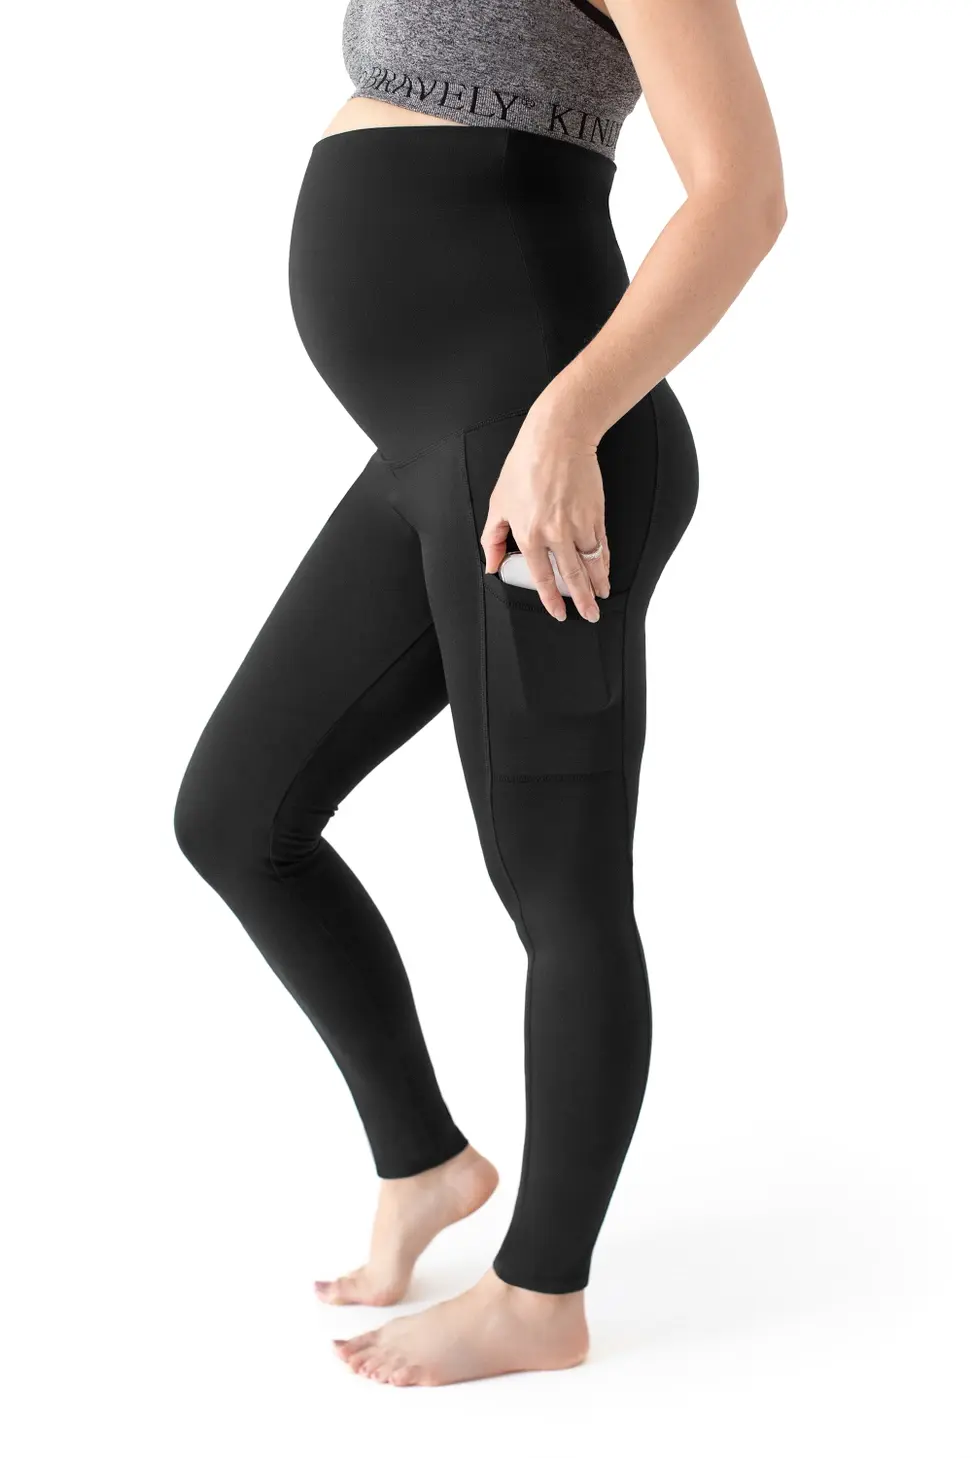 Louisa Maternity & Postpartum Support Leggings with Pocket- Black -  HipBabyGear